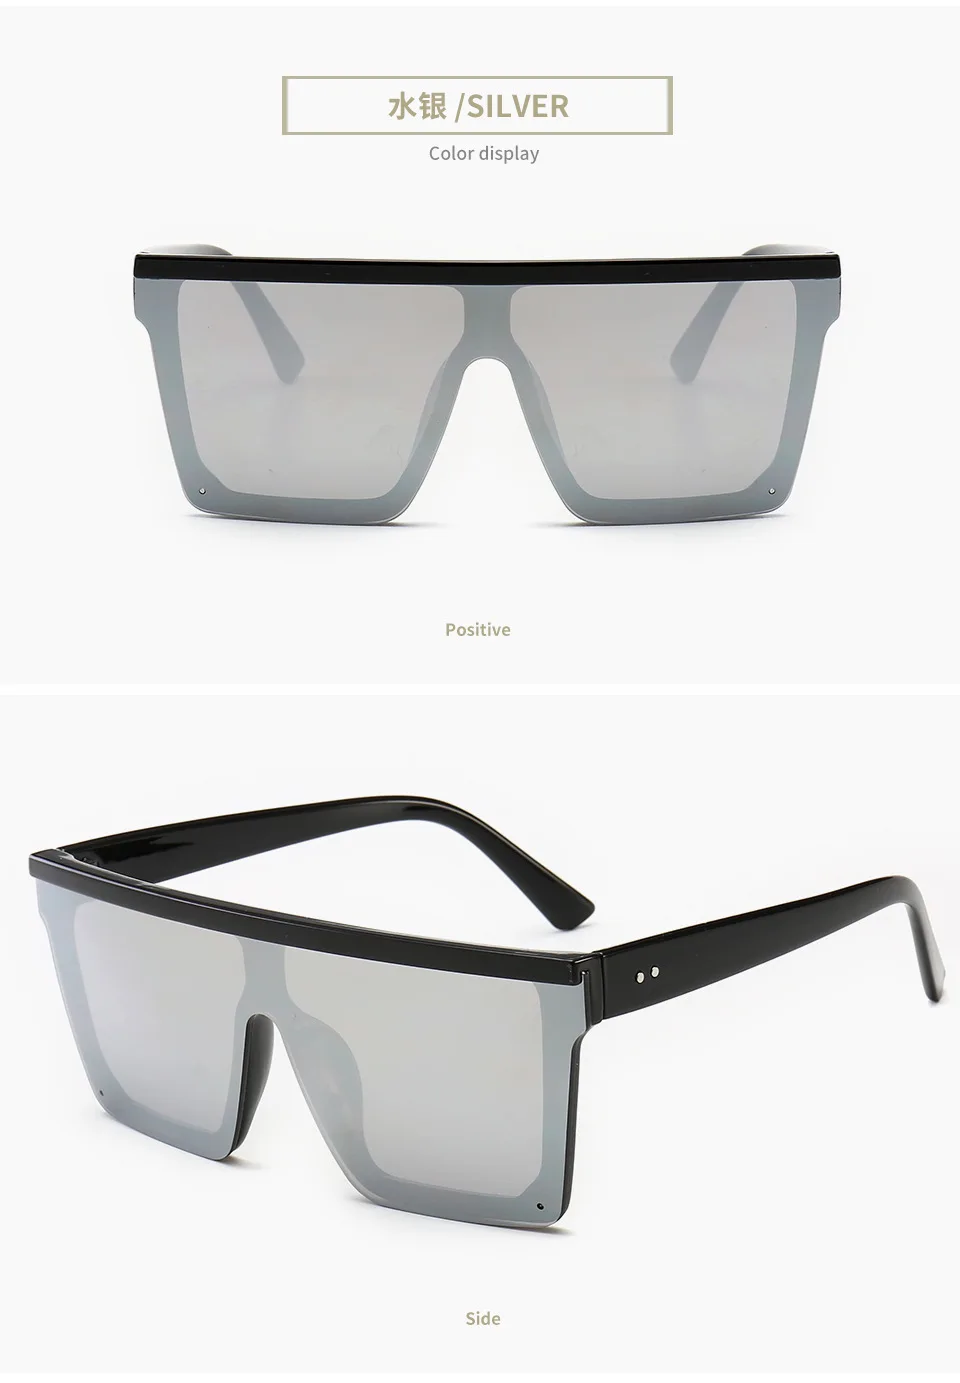 Jaspeer Male Flat Sunglasses Men Black Square Shades Uv400 